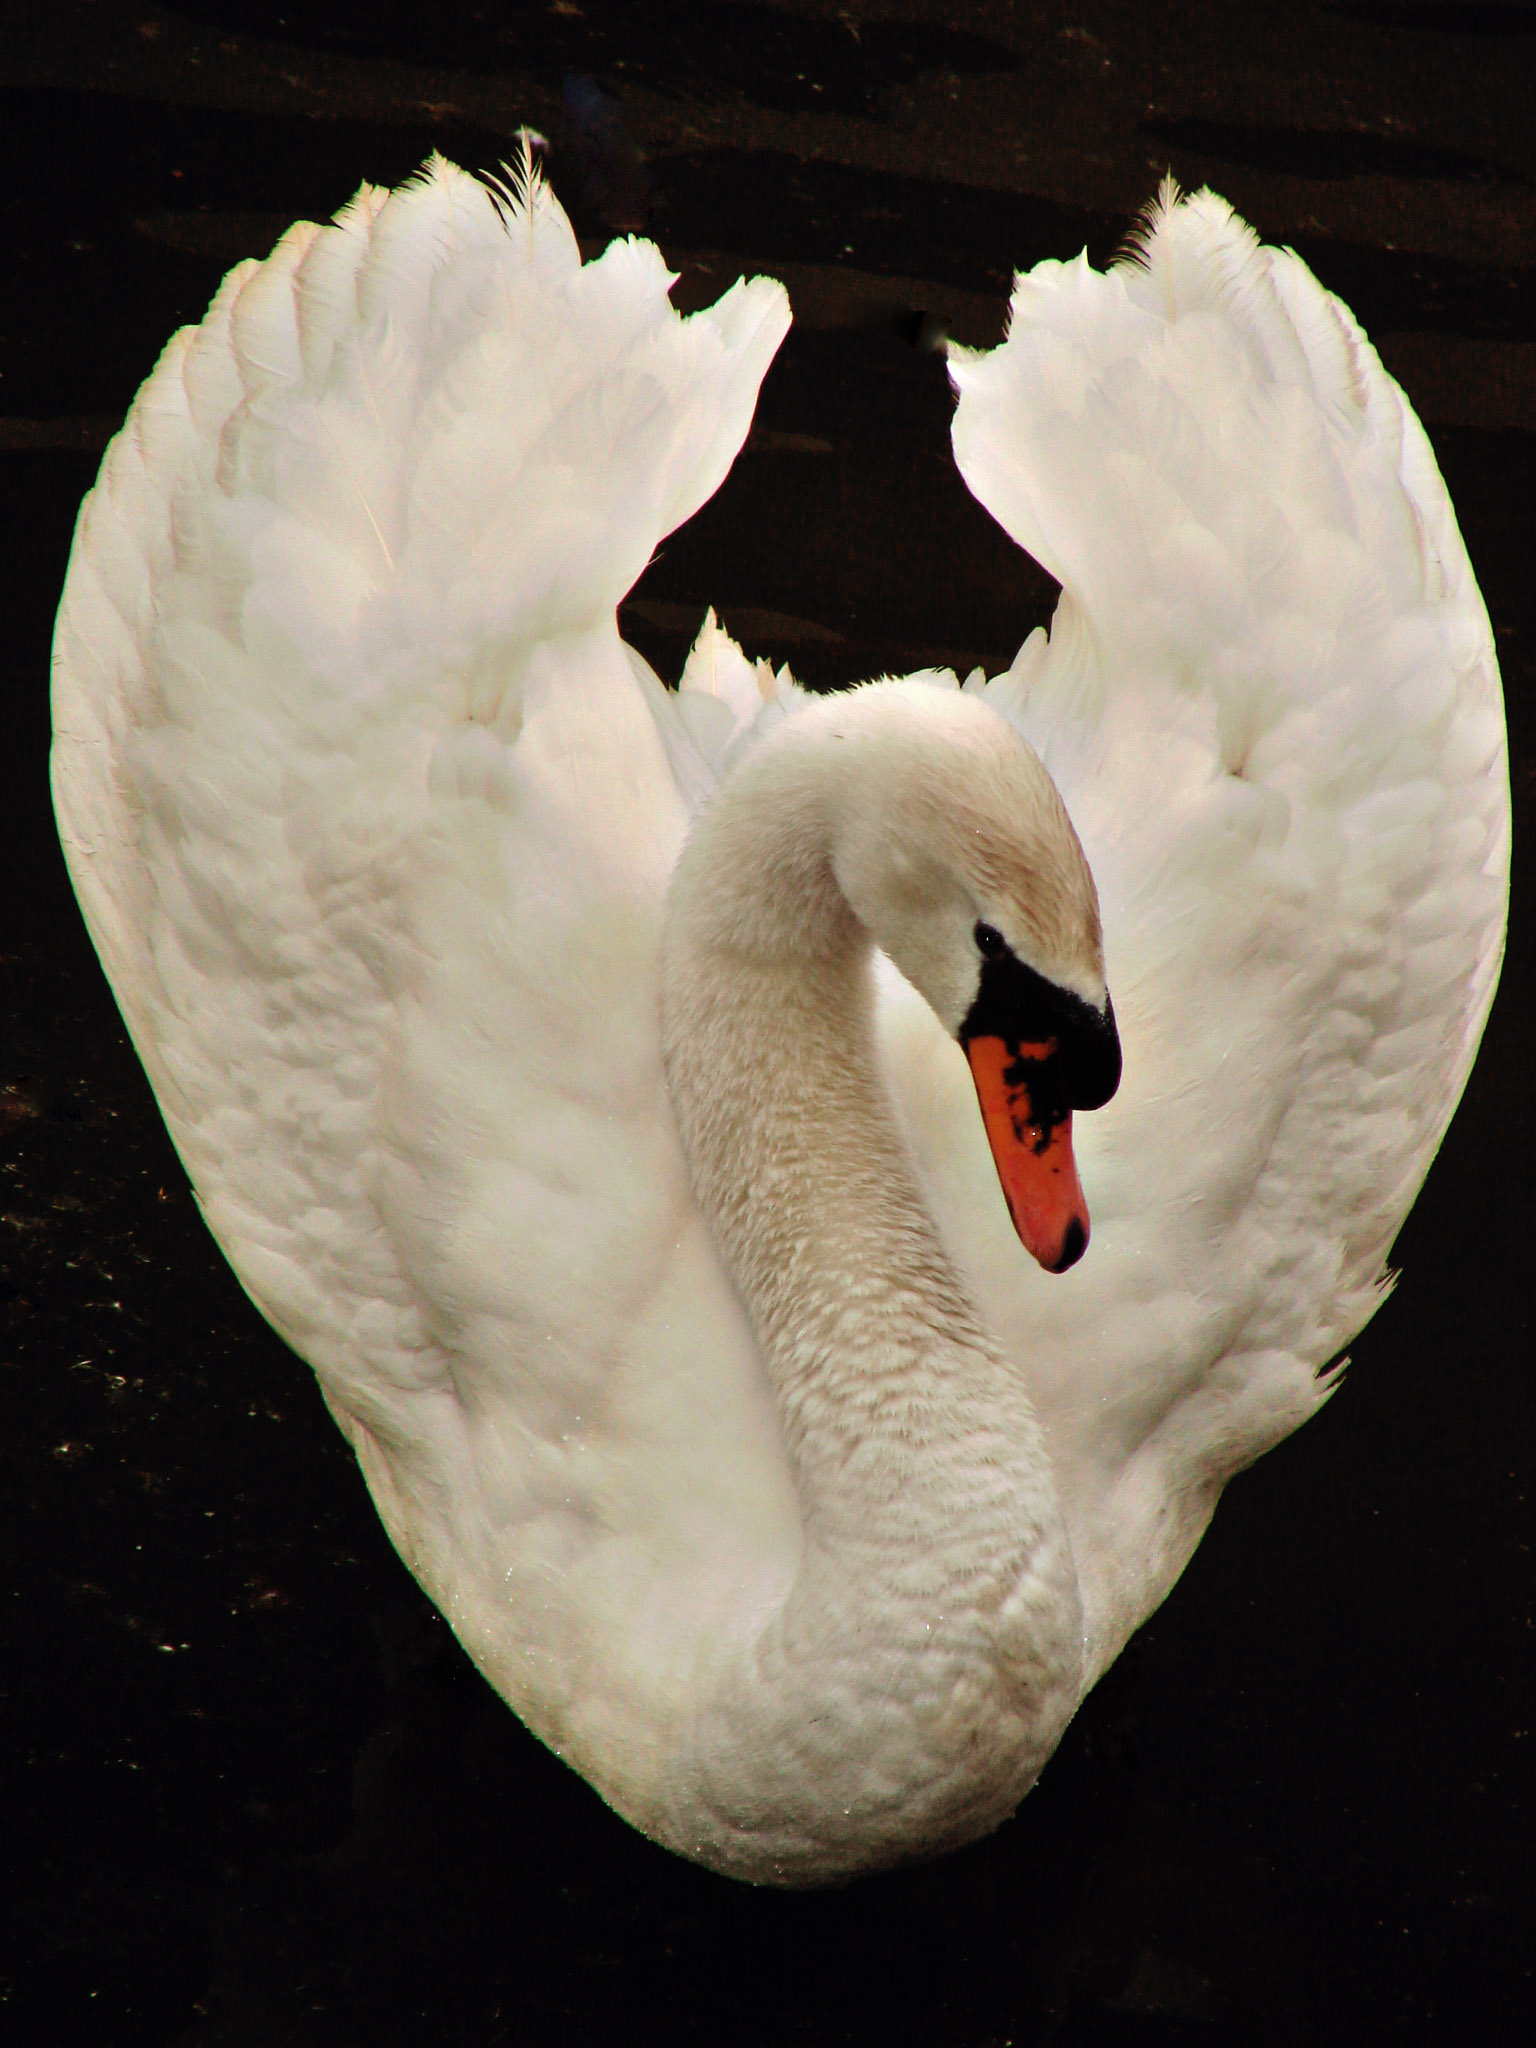 File:White Swan dsc01208-nevit.jpg - Wikimedia Commons